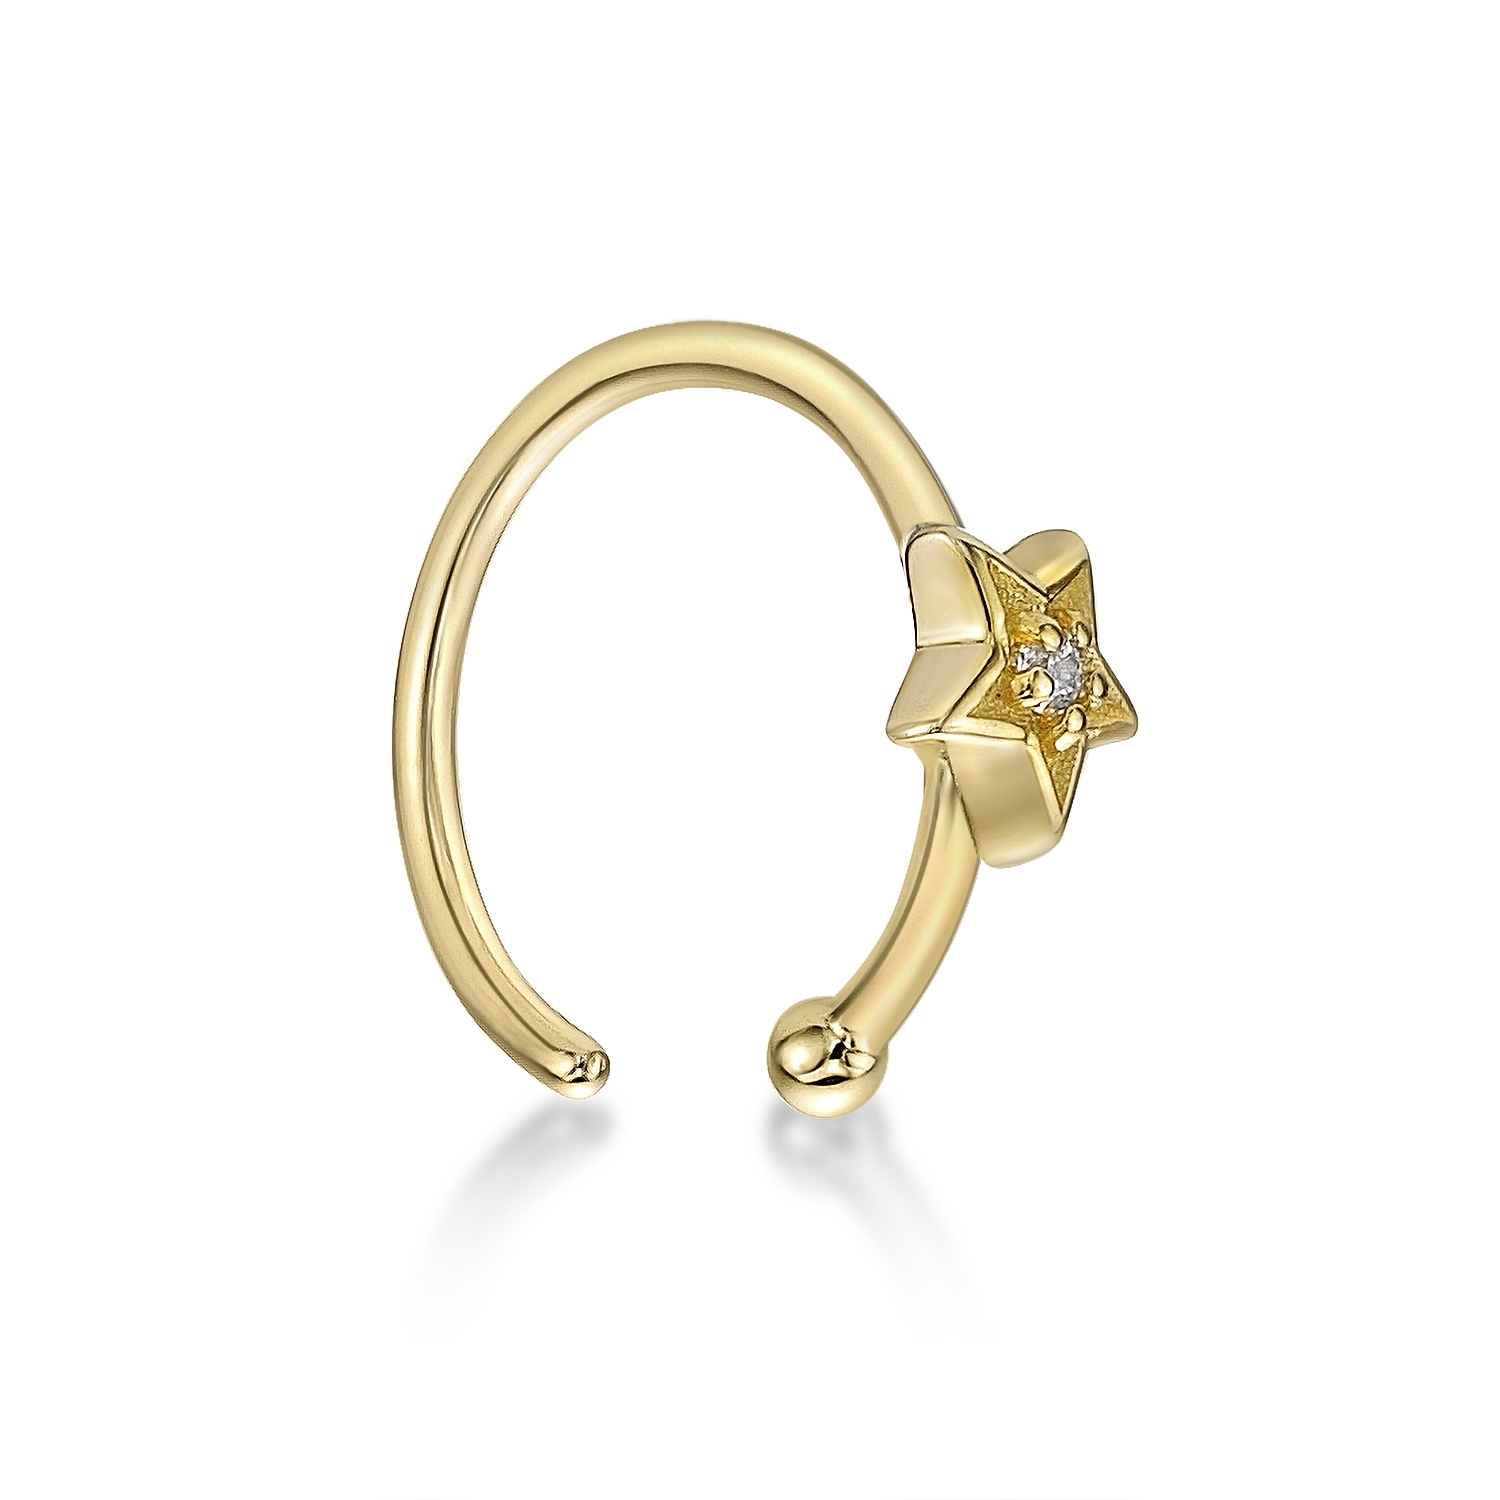 Lavari Jewelers Women's 10 MM Star Hoop Nose Ring, 14K Yellow Gold, 1 MM Cubic Zirconia, 20 Gauge